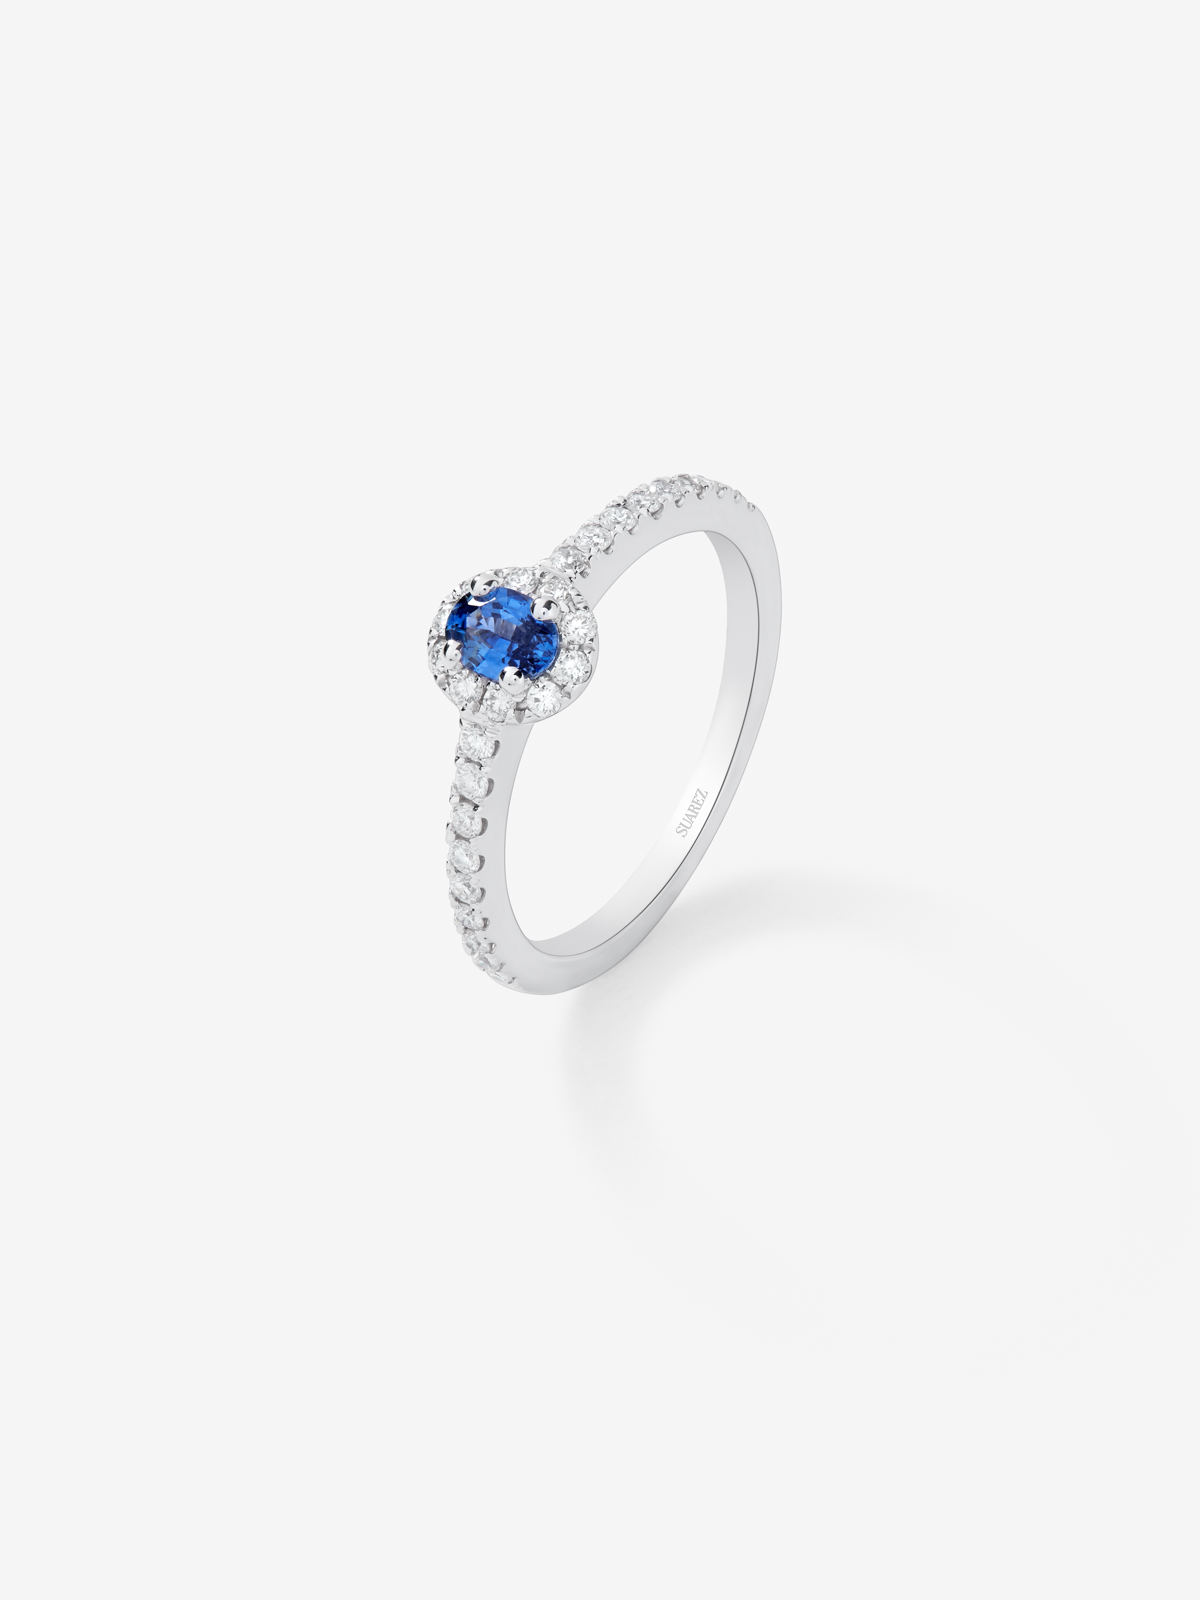 Anillo de oro blanco de 18K con zafiro azul en talla oval de 0,64 cts y diamantes en talla brillante de 0,37 cts